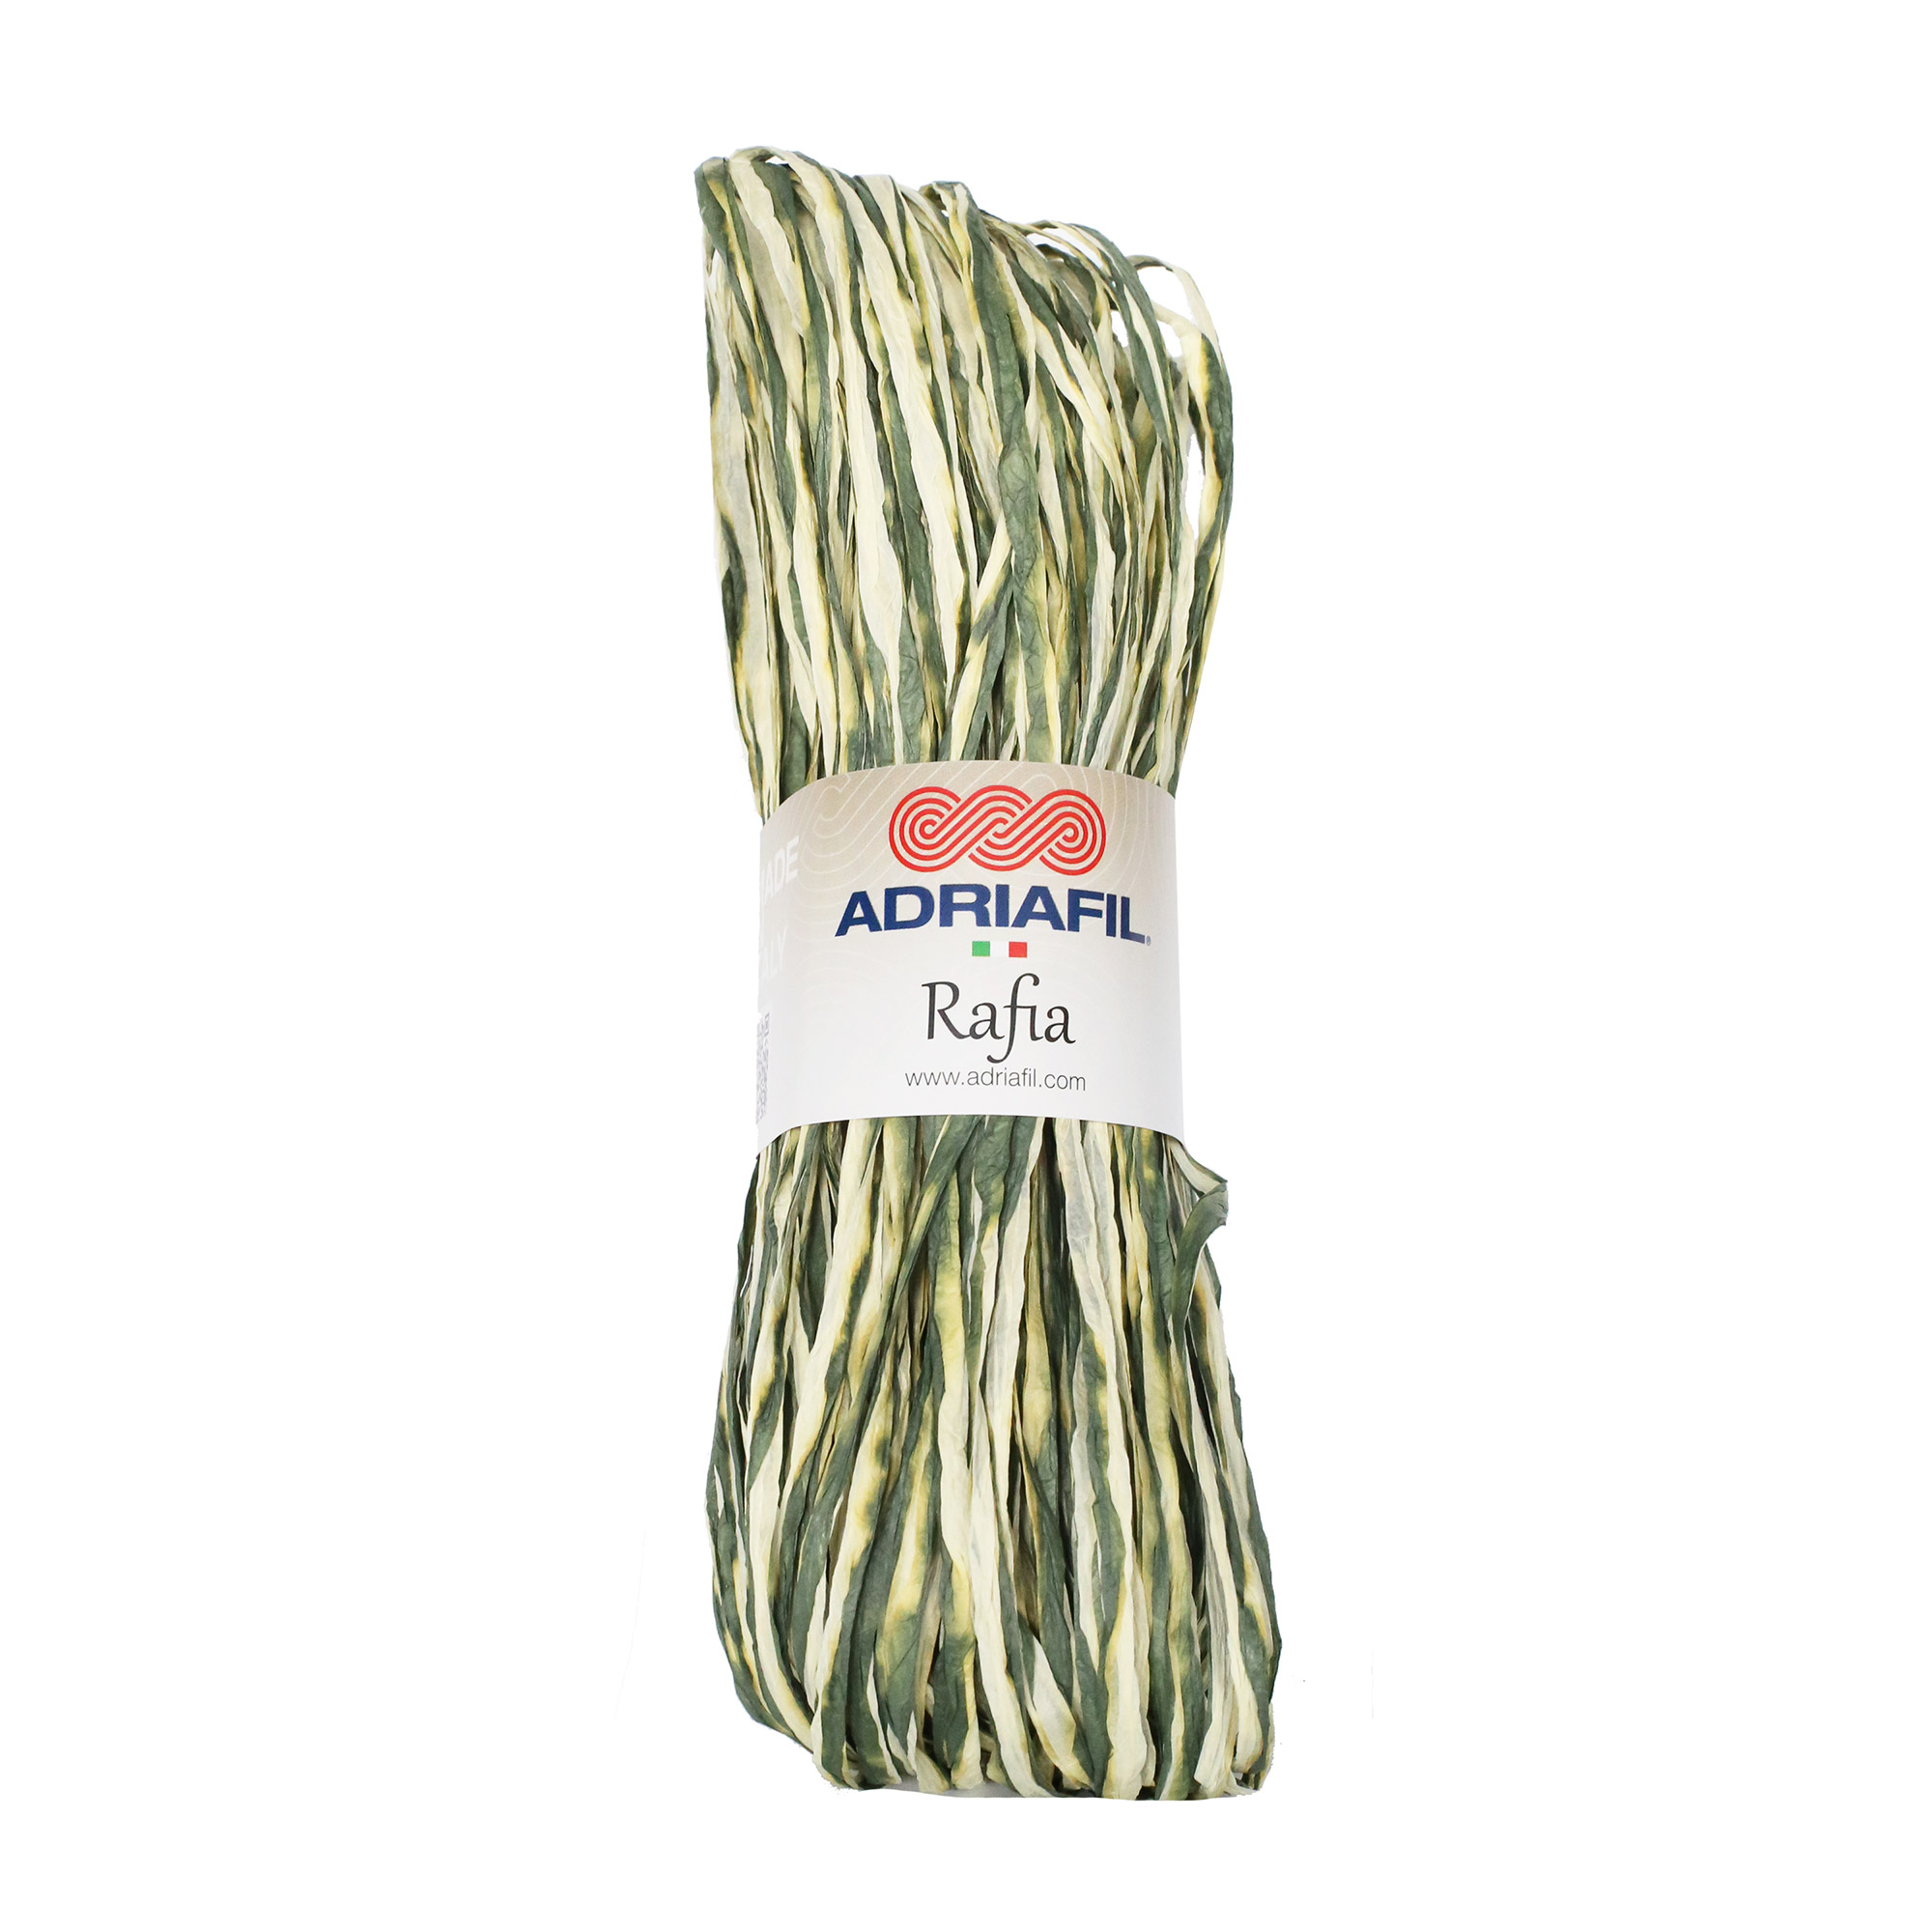 Rafia - Adriafil - 40 verde sfumato